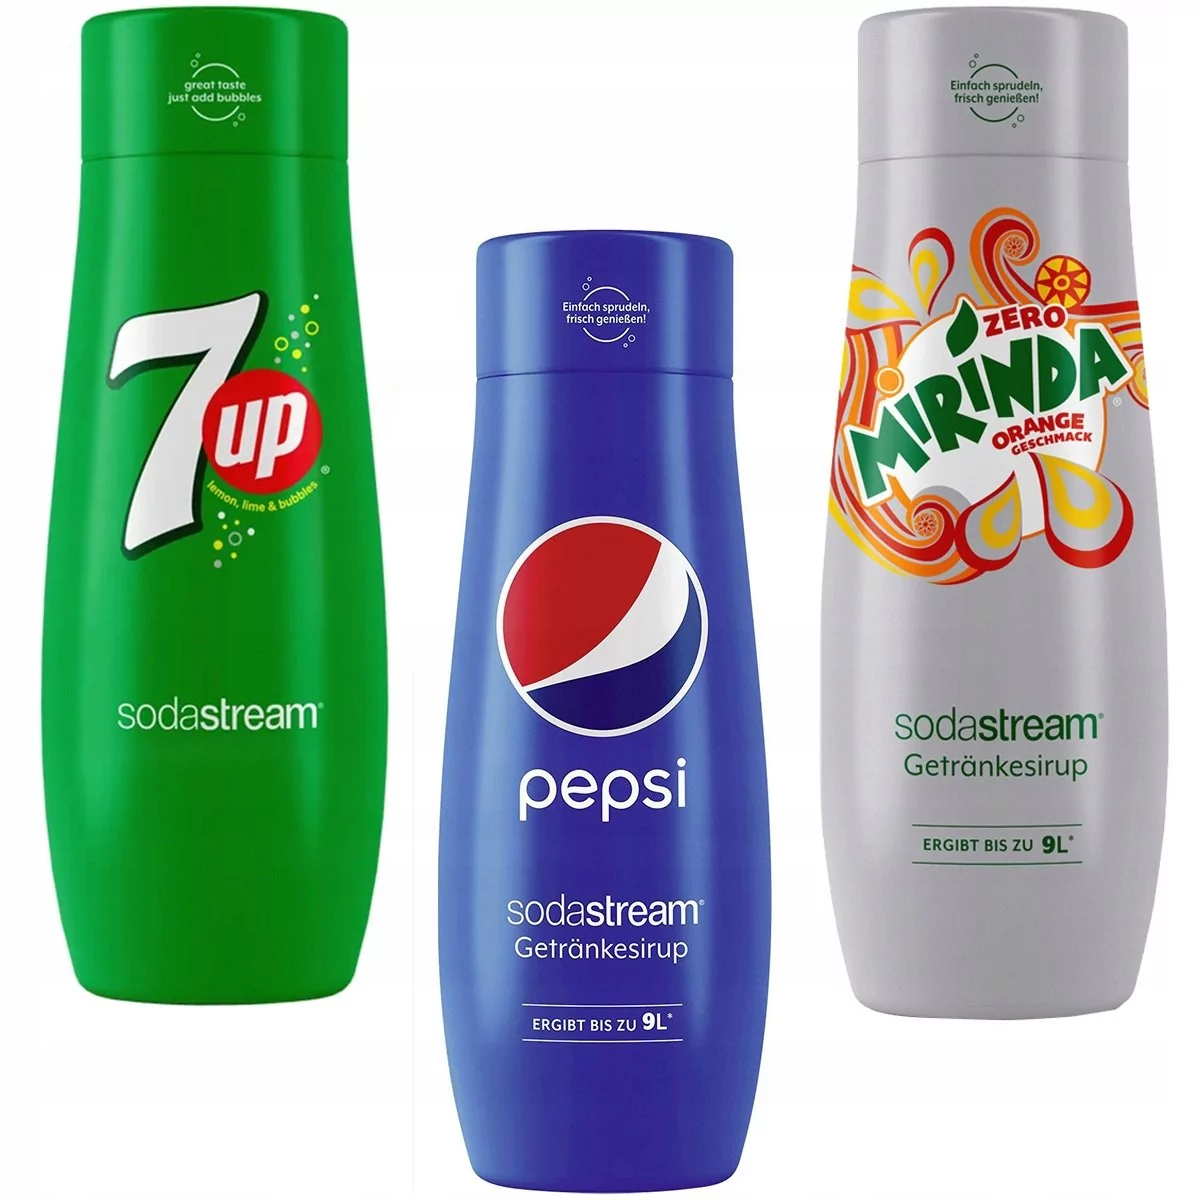 Zestaw syropów SodaStream Pepsi, Pepsi Max, Mirinda, 7up 